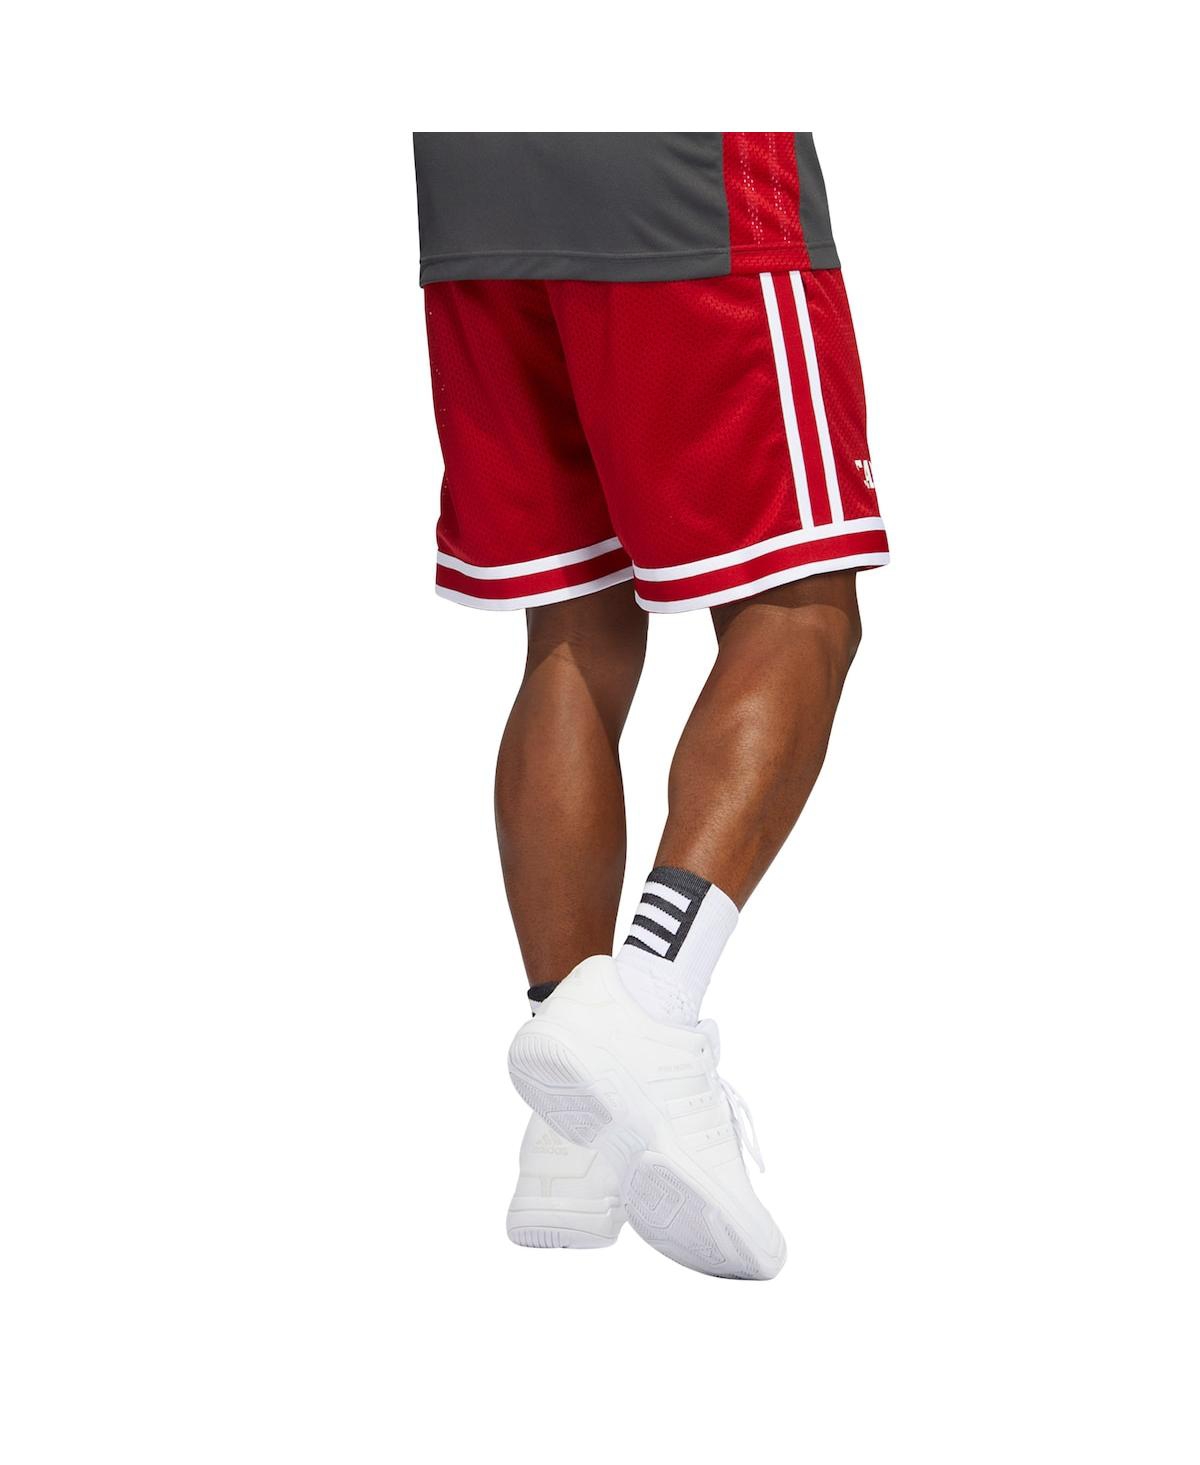 Shop Adidas Originals Men's Adidas Red Louisville Cardinals Reverse Retro Basketball Shorts